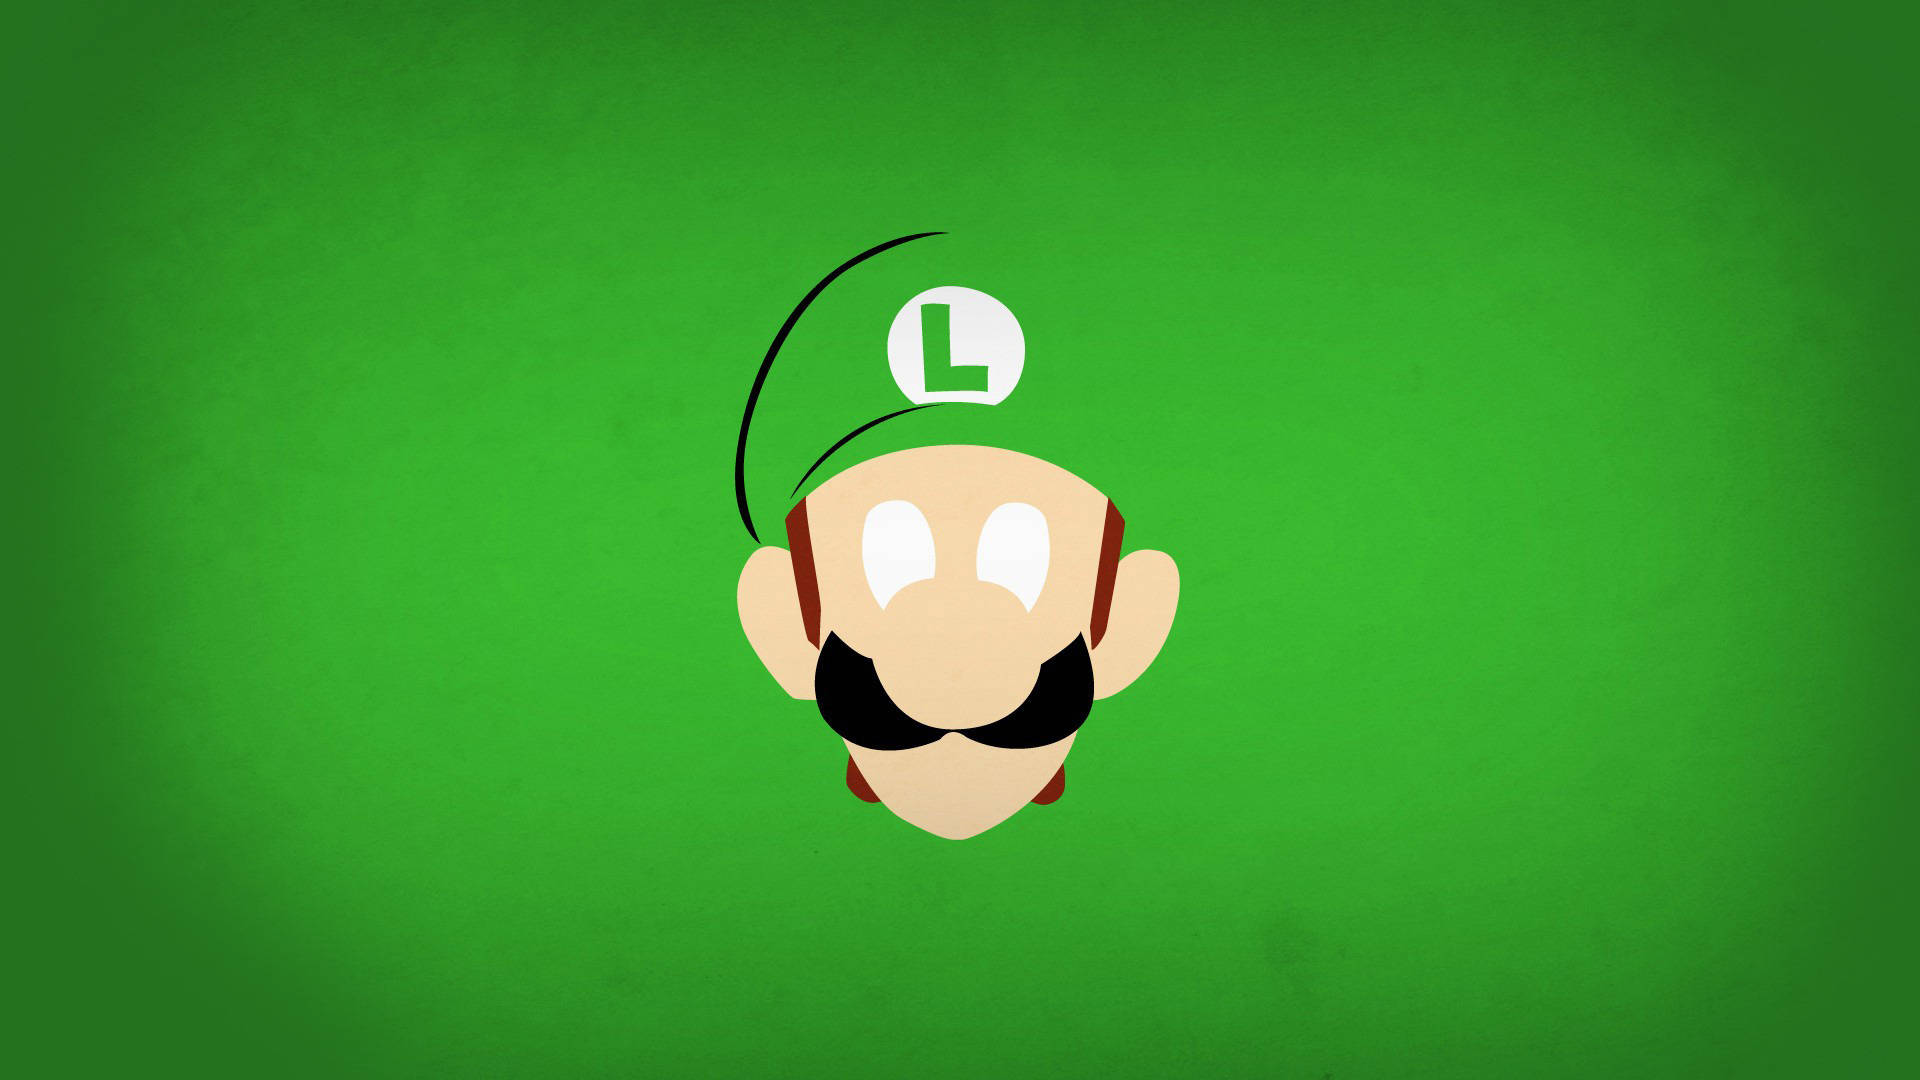 Luigi Nintendo Character Green Art Background